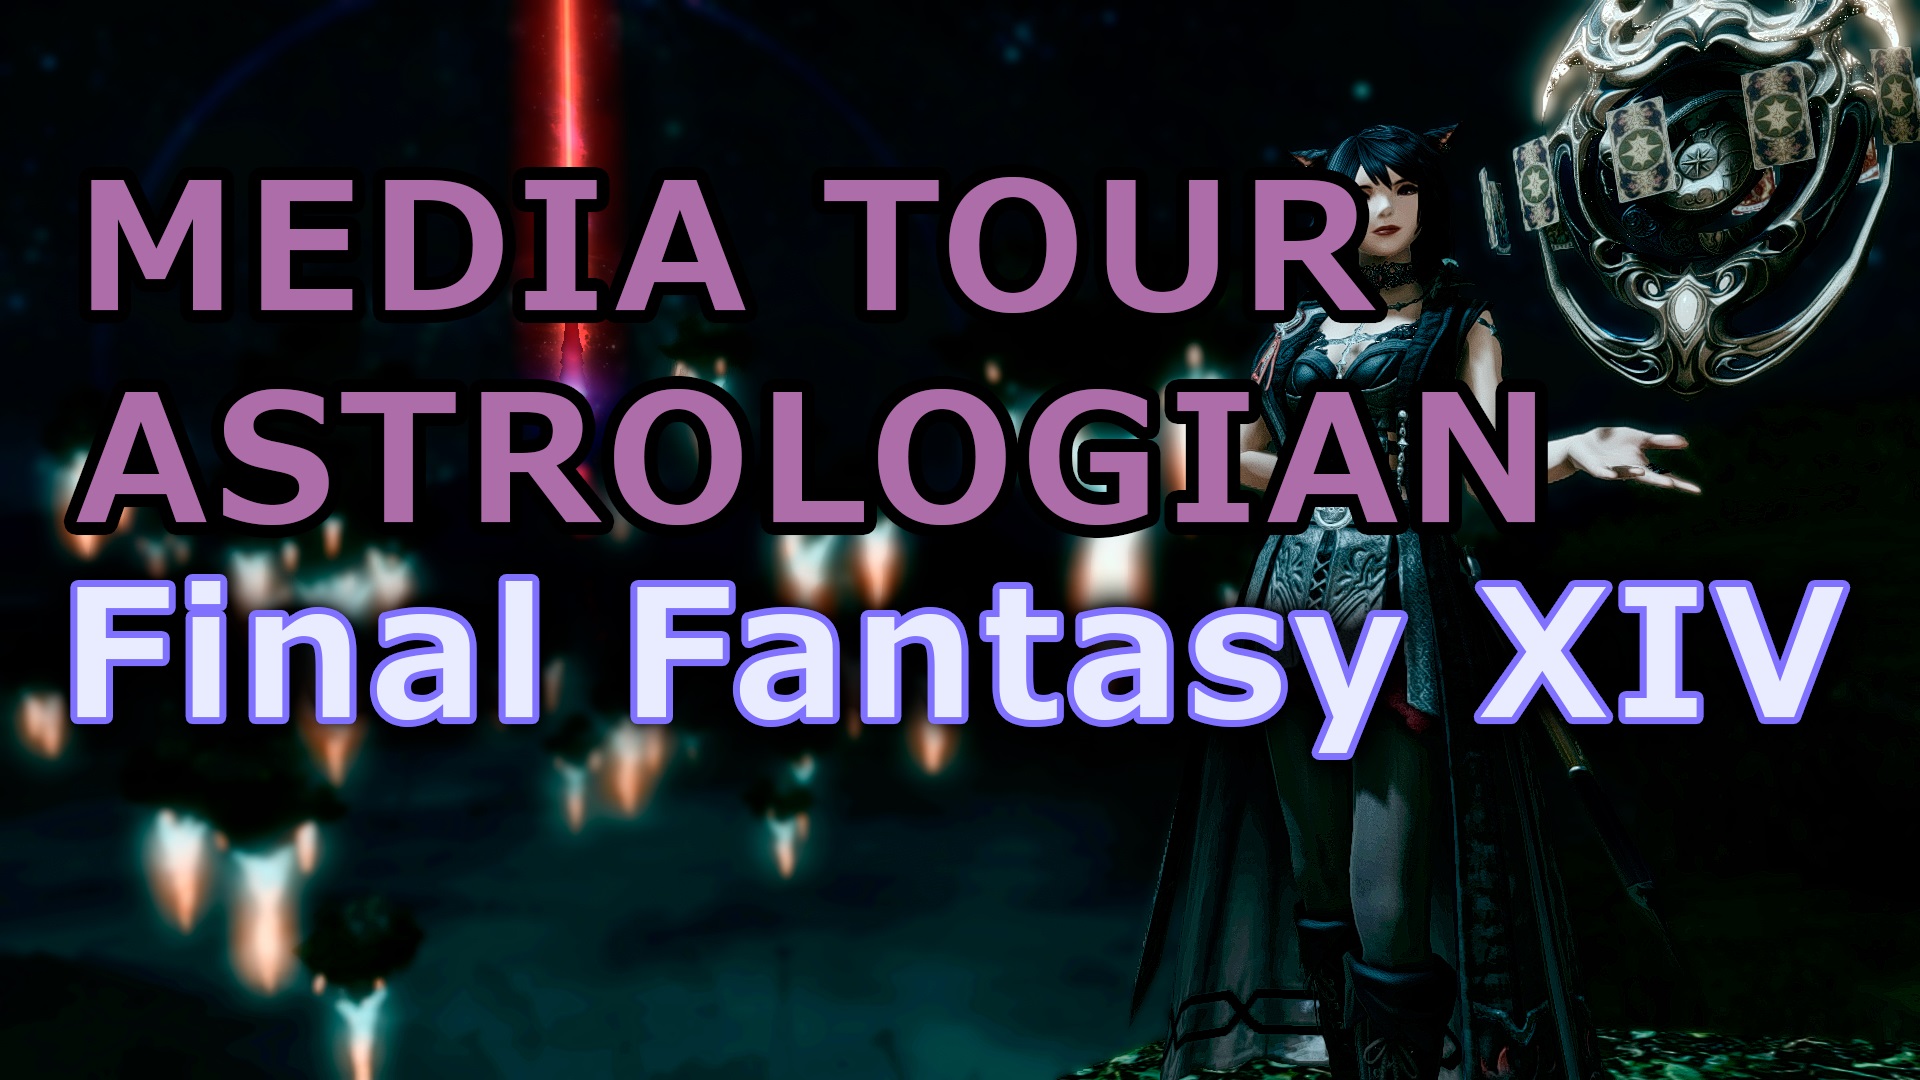 Astrologian Media Tour